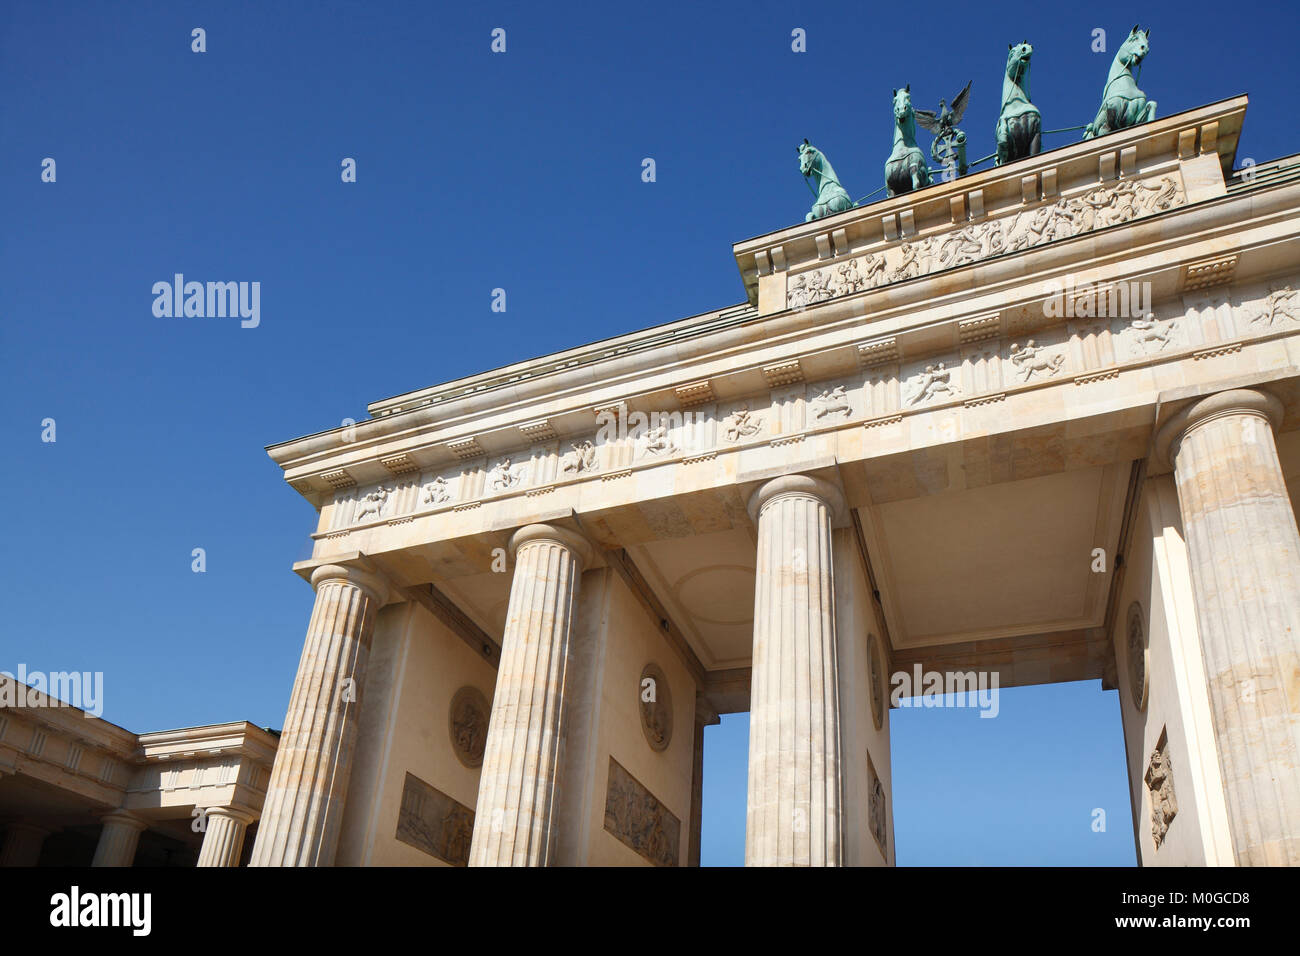 DEU, Deutschland, Berlin: Brandenburger Tor | DEU, Germany, Berlin: Brandenburger Gate Stock Photo